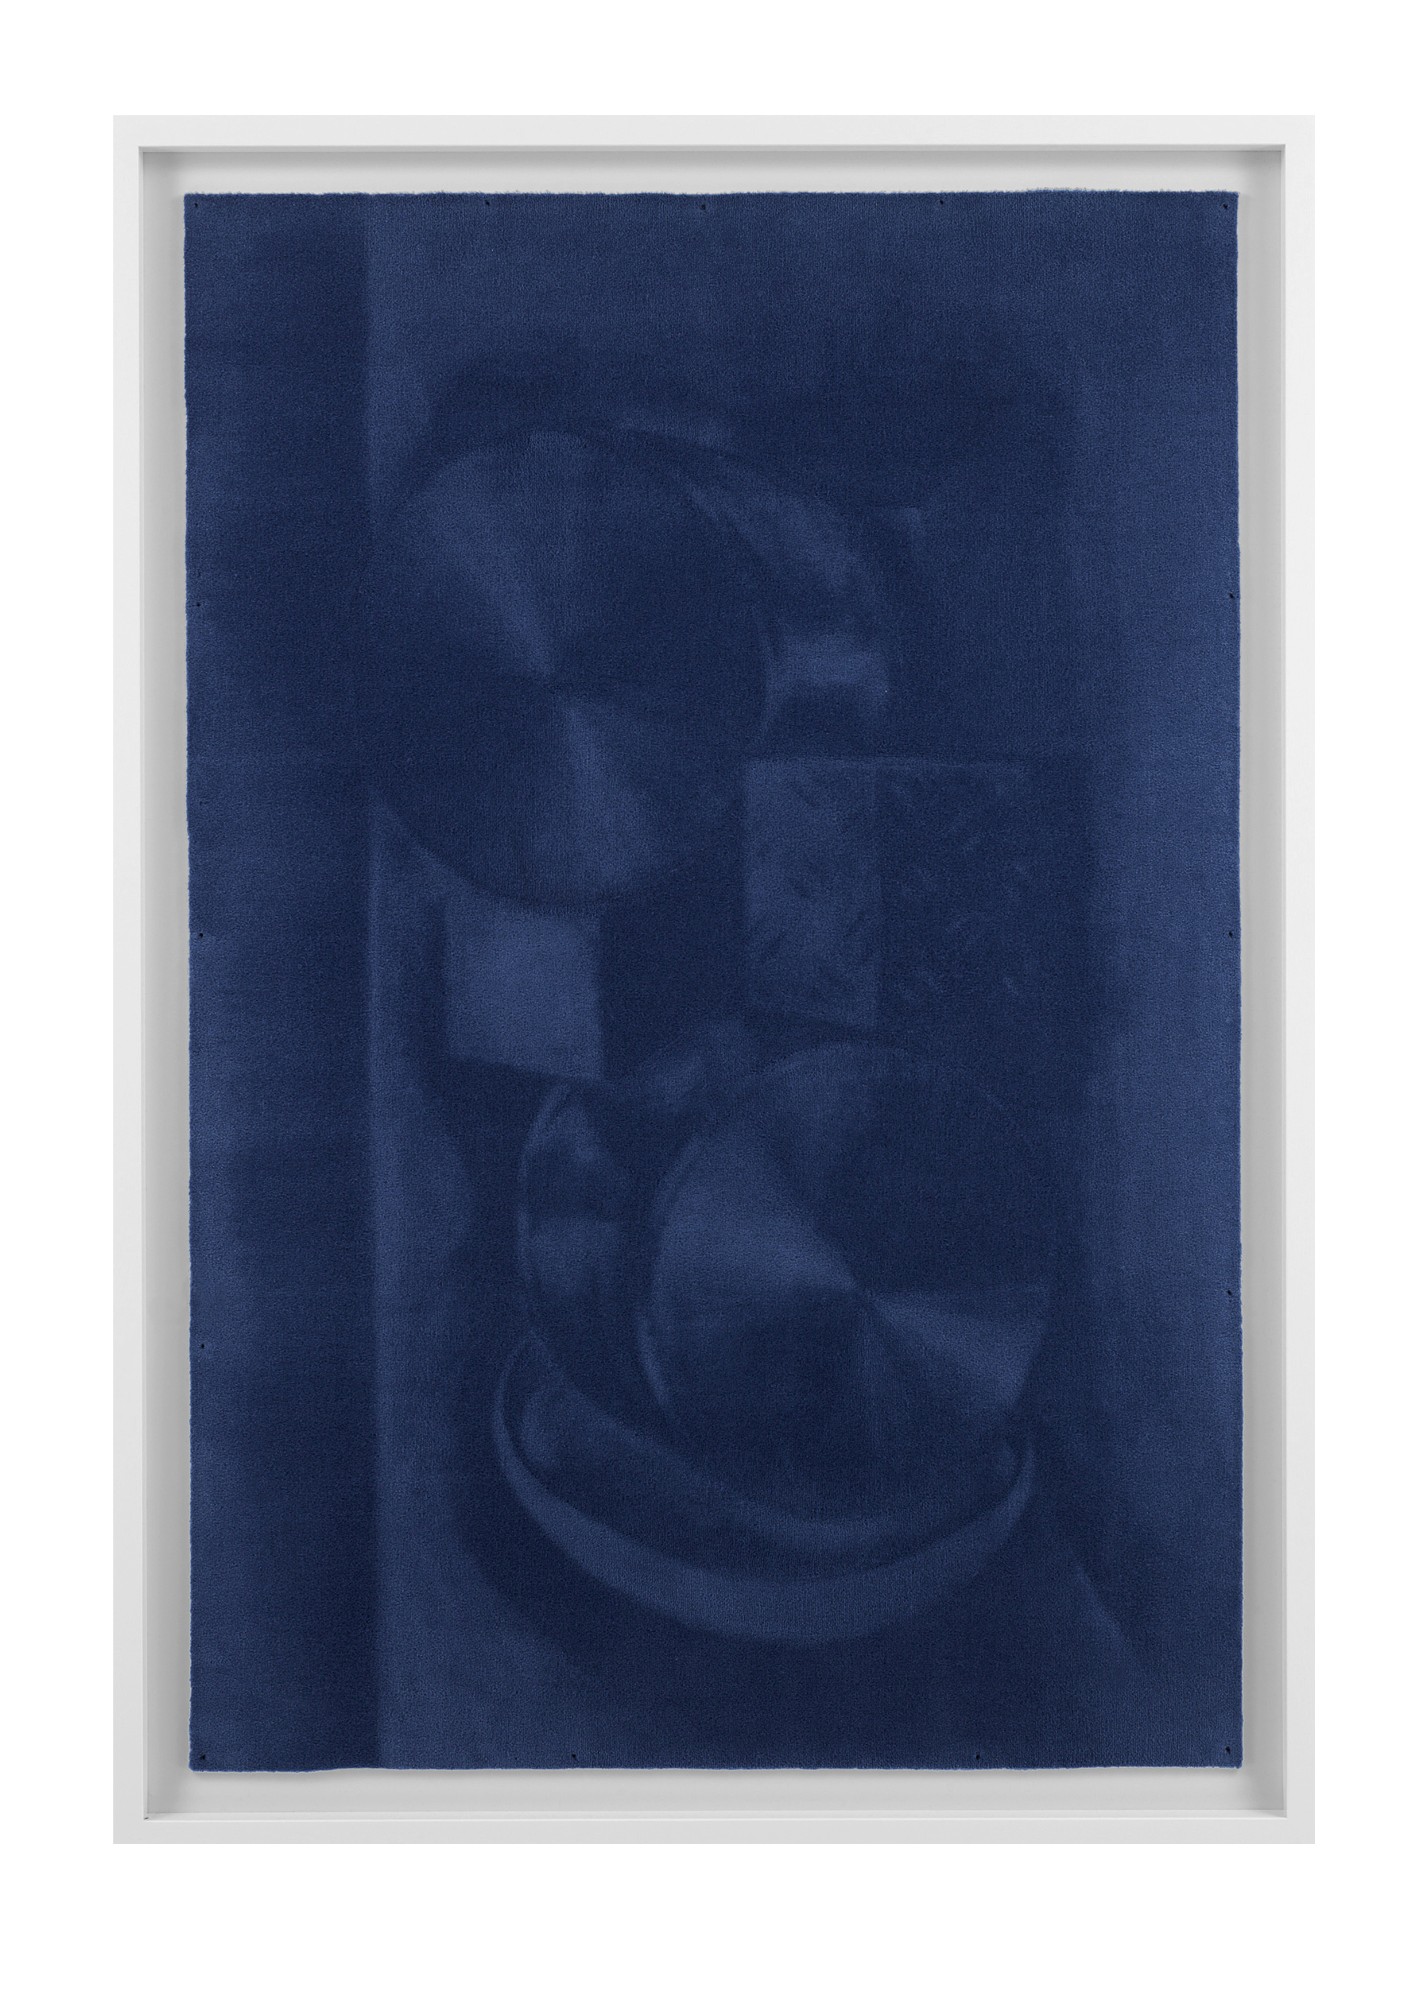 Tobias Hantmann, untitled, 2009, velour carpet, painted wooden frame, glass, 150 x 100 cm